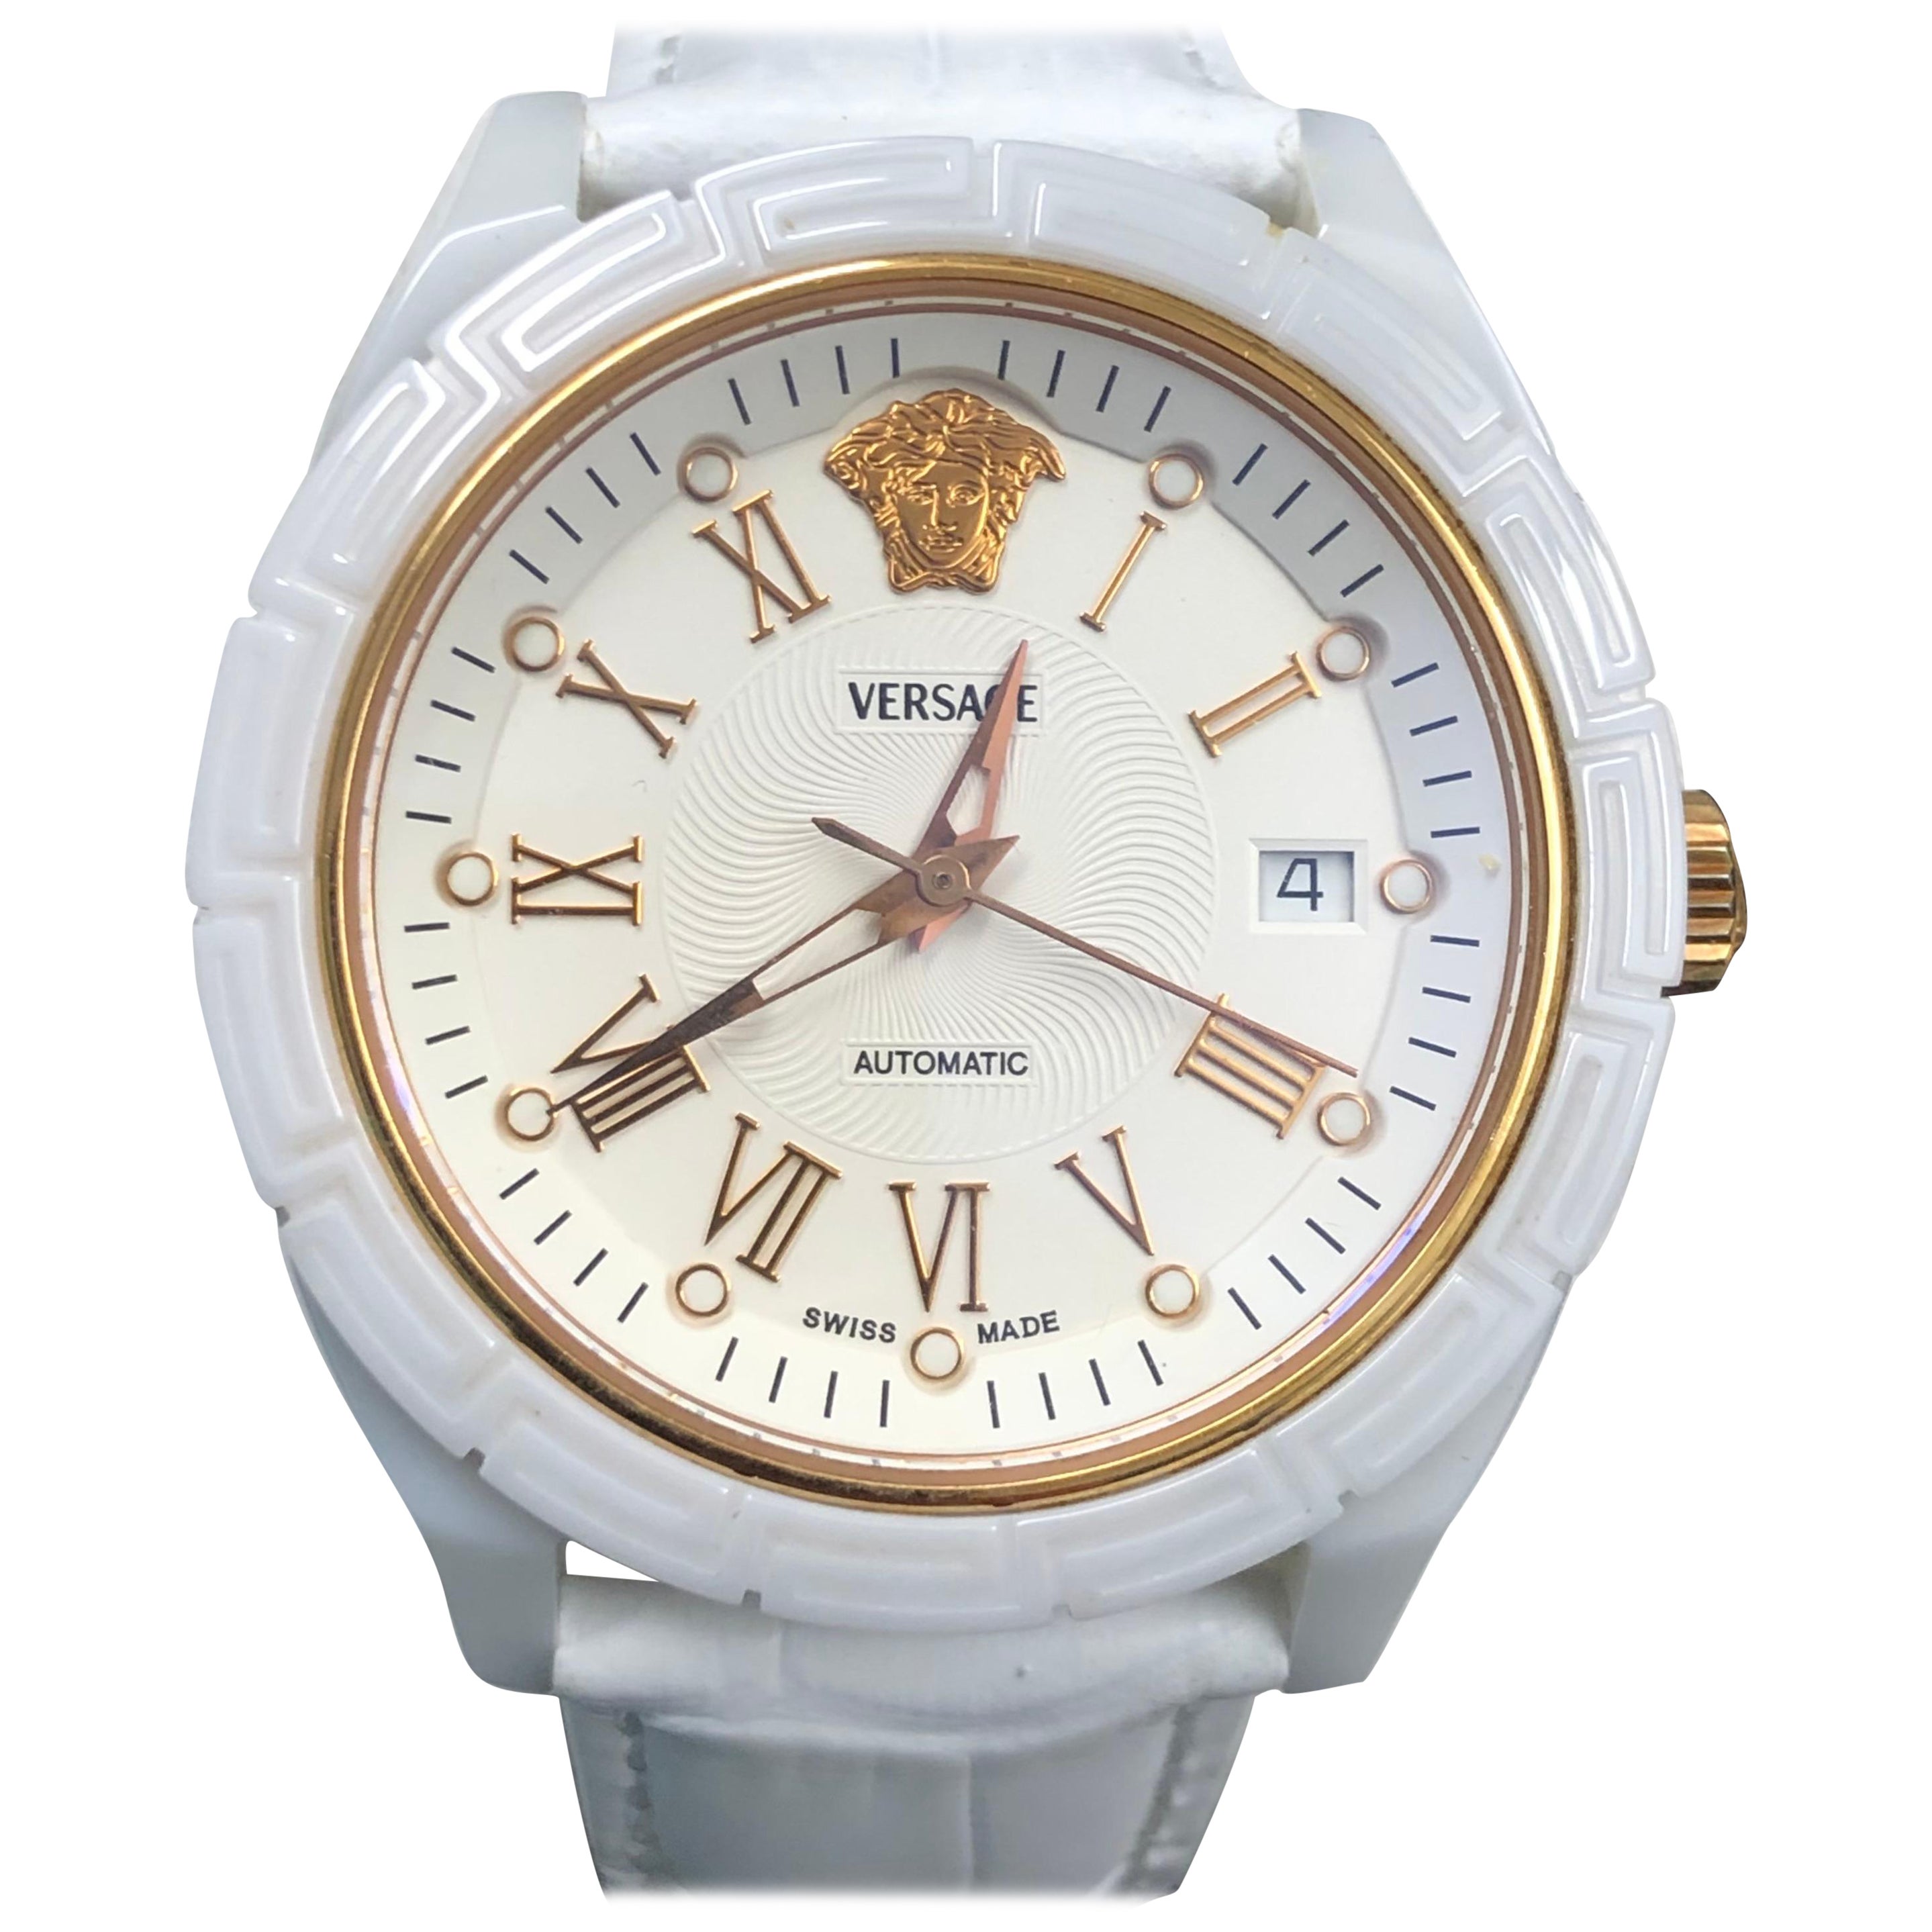 Versace Men’s DV One Automatic Ceramic Watch